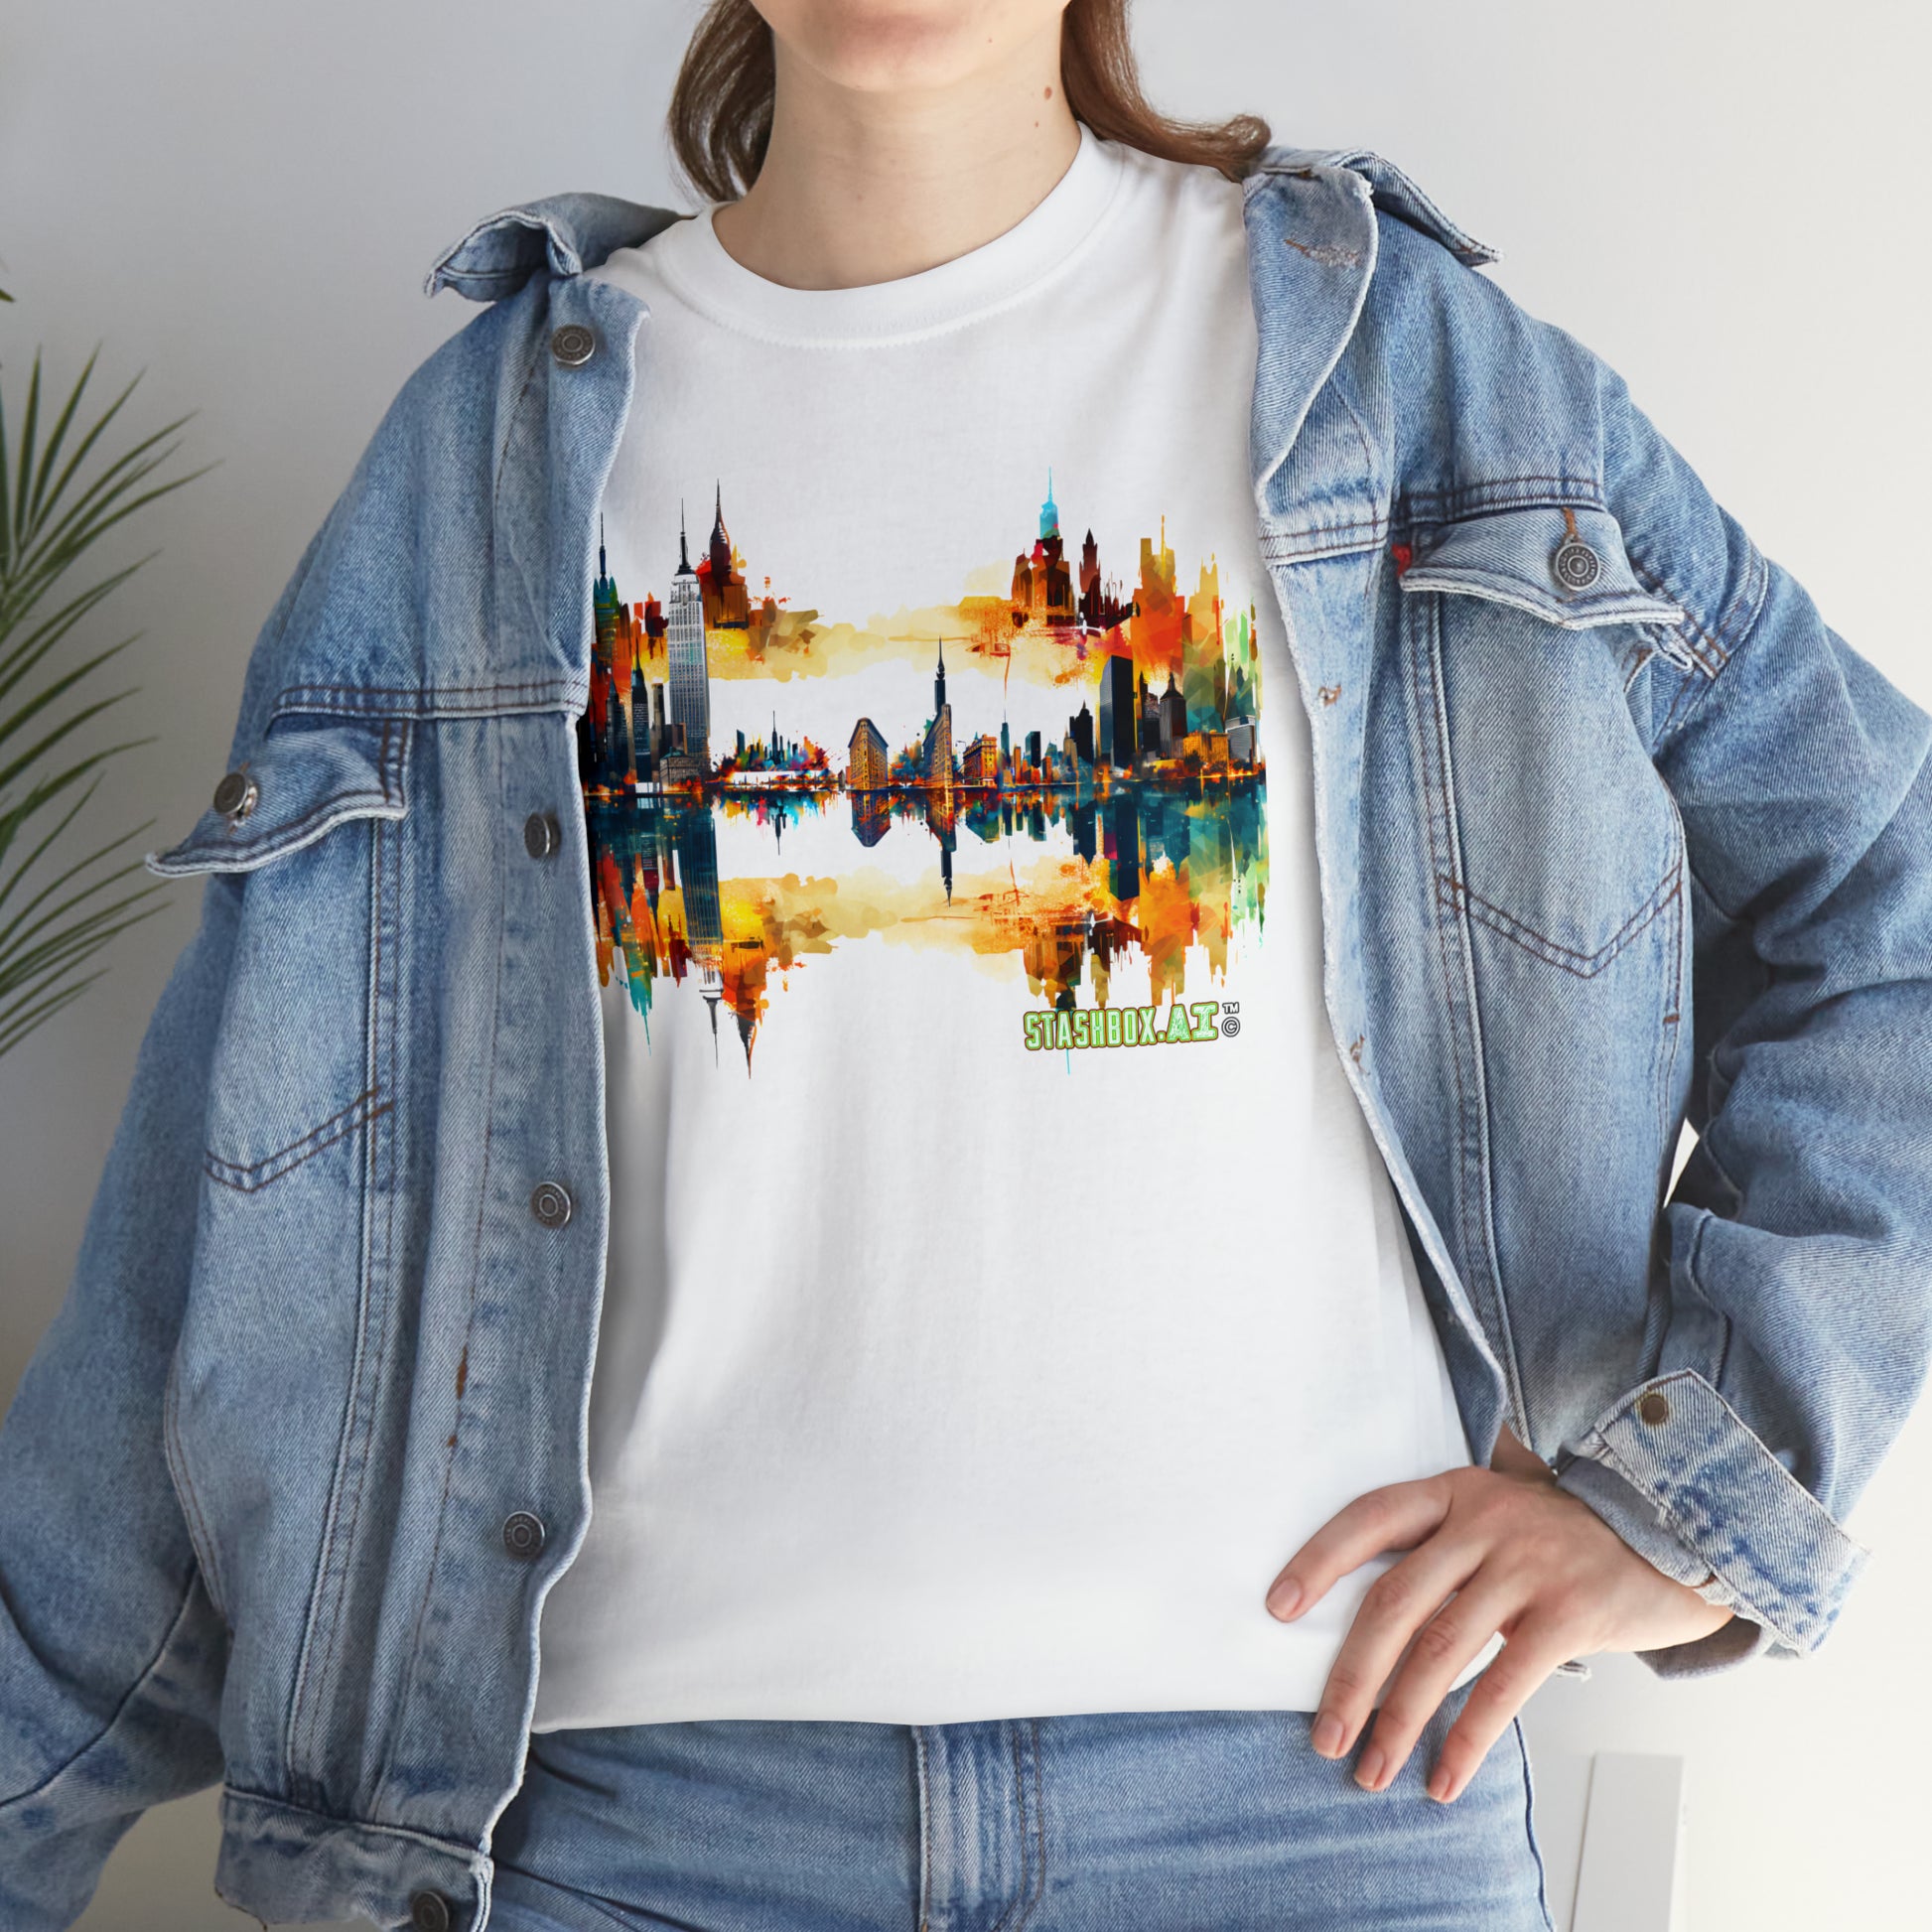 Cityscape Watercolor Print Shirt - Stashbox NYC Design - Unisex Cotton Tee